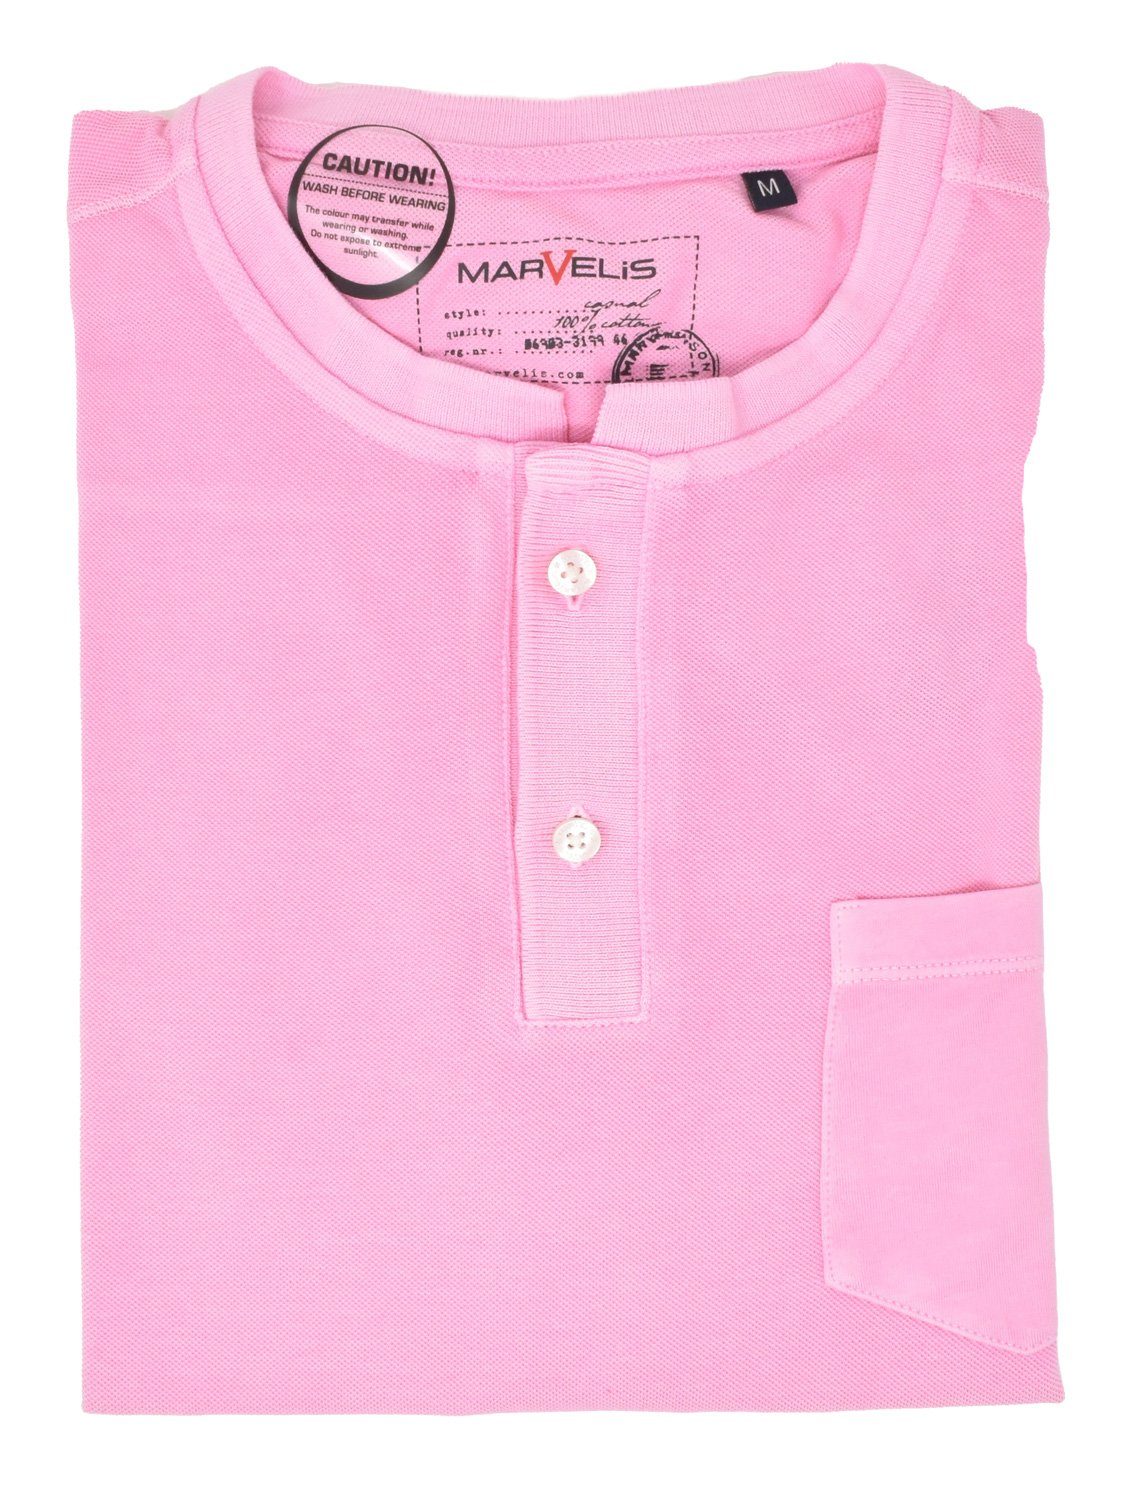 - Einfarbig Casual Rosa Poloshirt - Poloshirt Stehkragen - Fit MARVELIS -